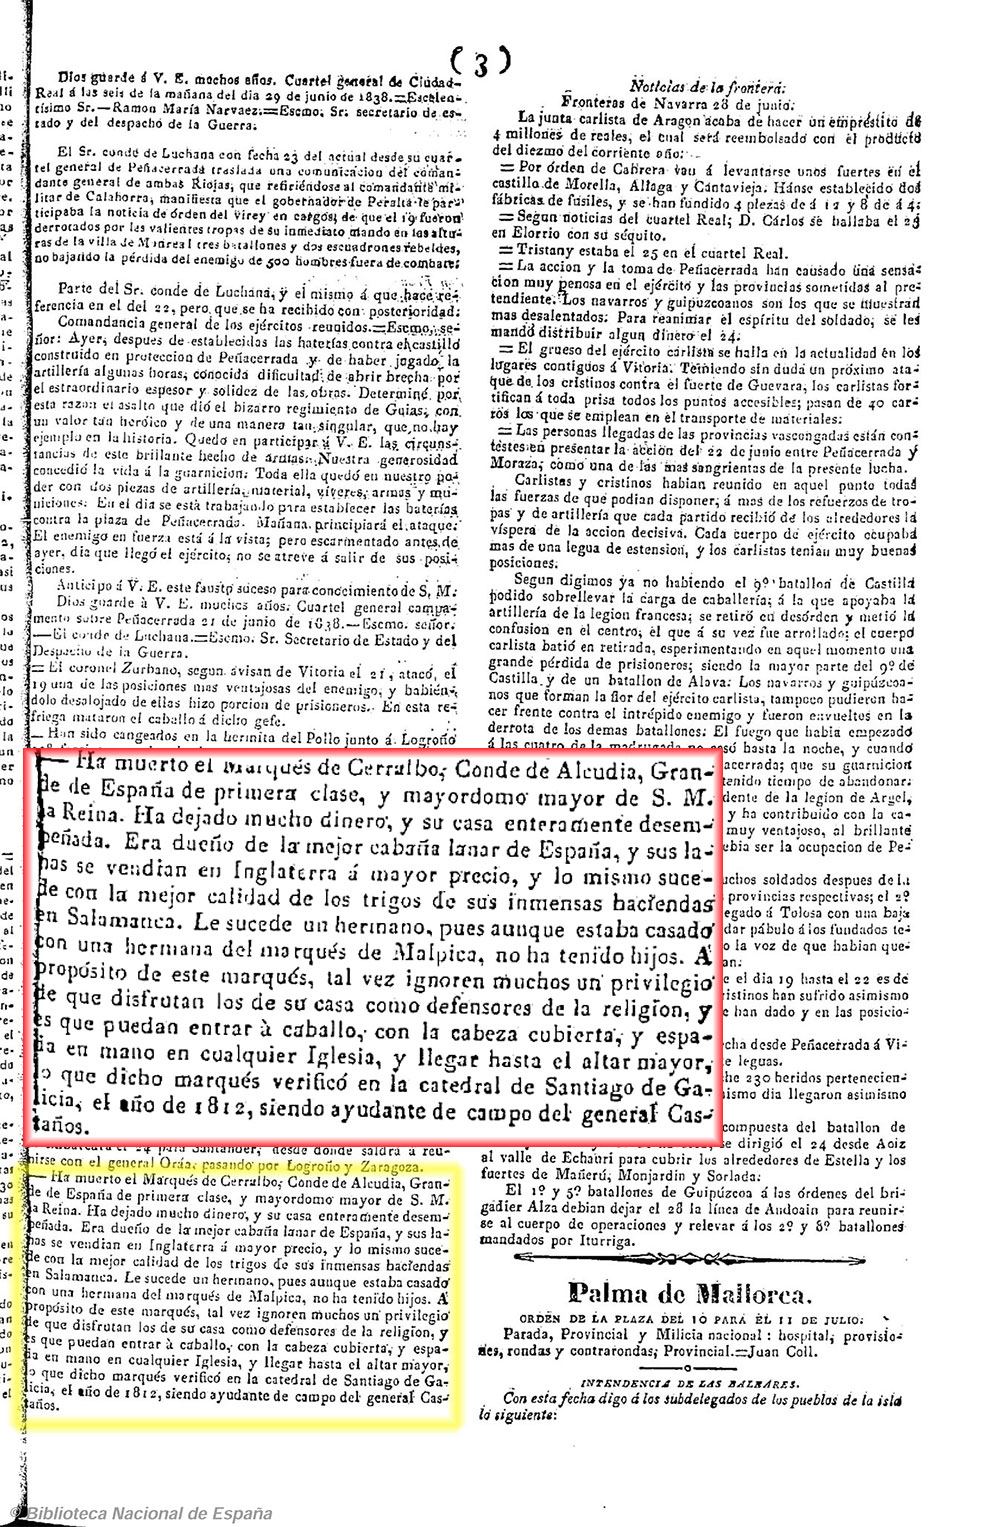 1838_7_11_Diario-constitucionaldePalmadeMallorca_priilegiodelmarquesacaballo